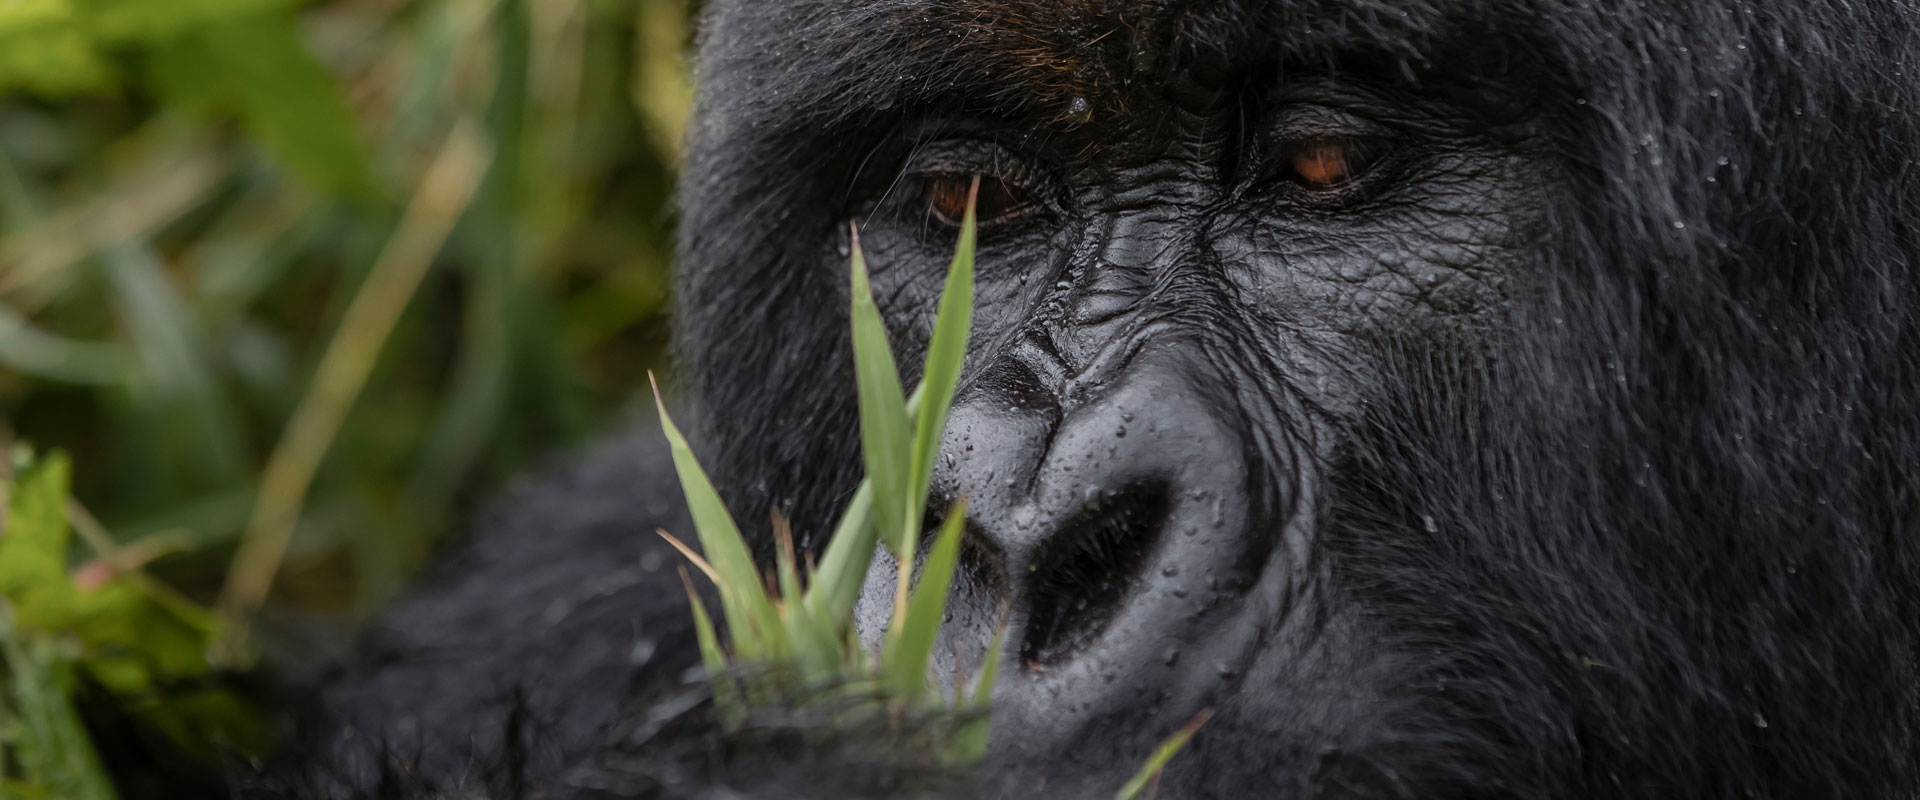 Gorilla Trekking Safaris Volcanoes National Park - Gorillas